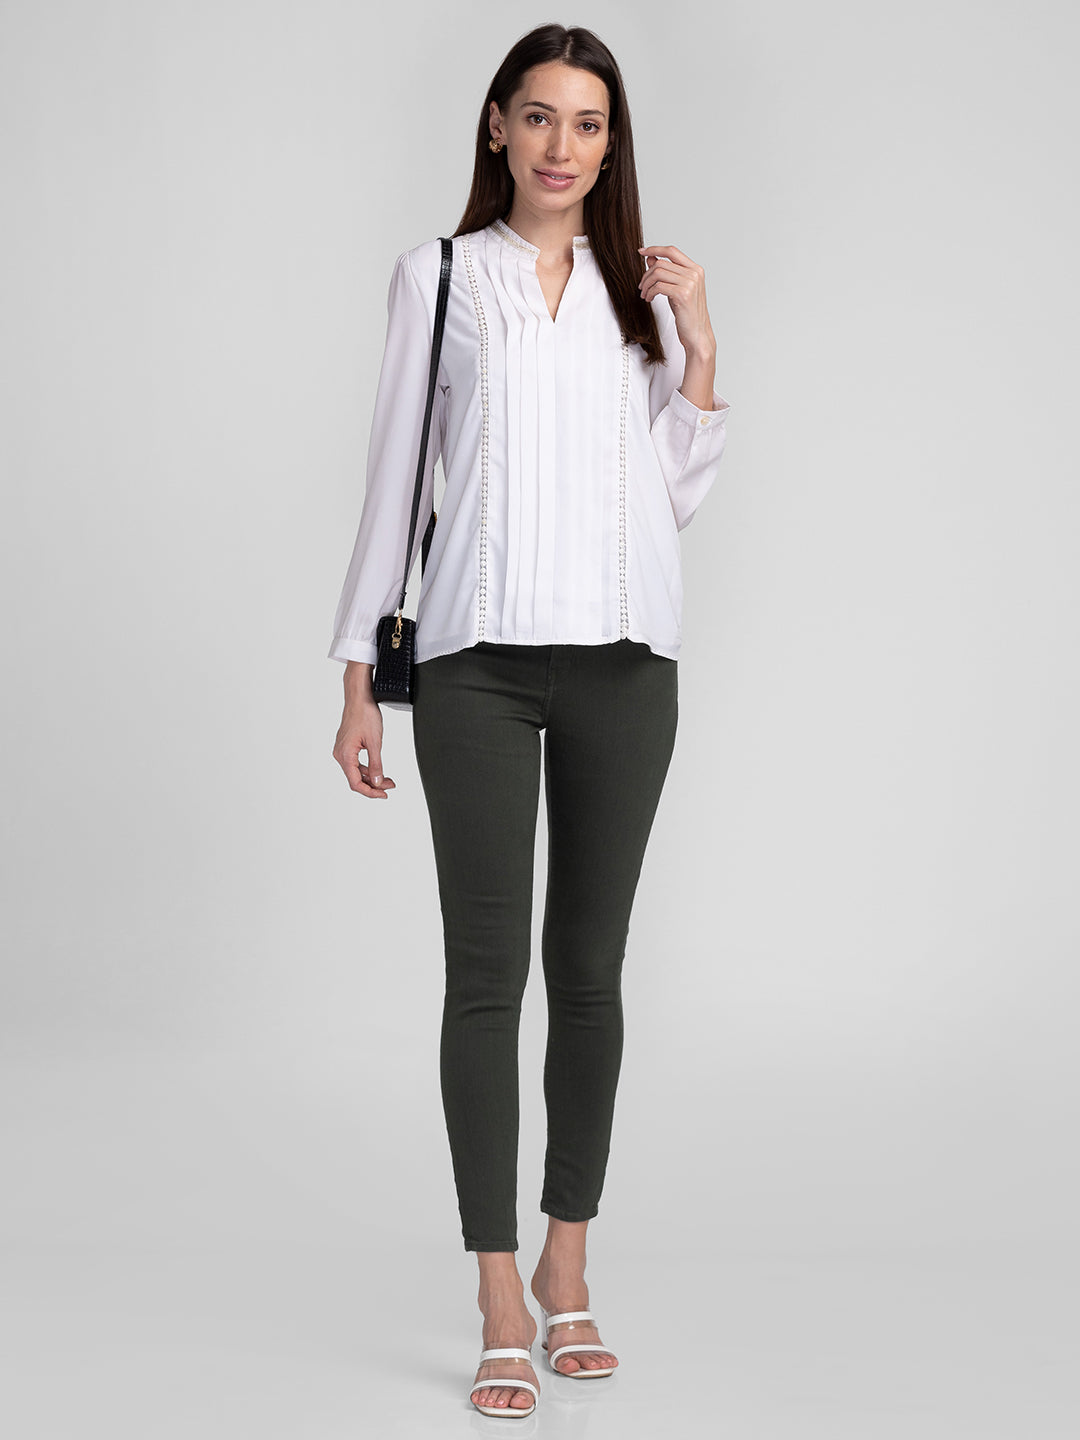 Spykar Women Dark Olive Cotton Super Skinny Ankle Length Jeans (Alexa)